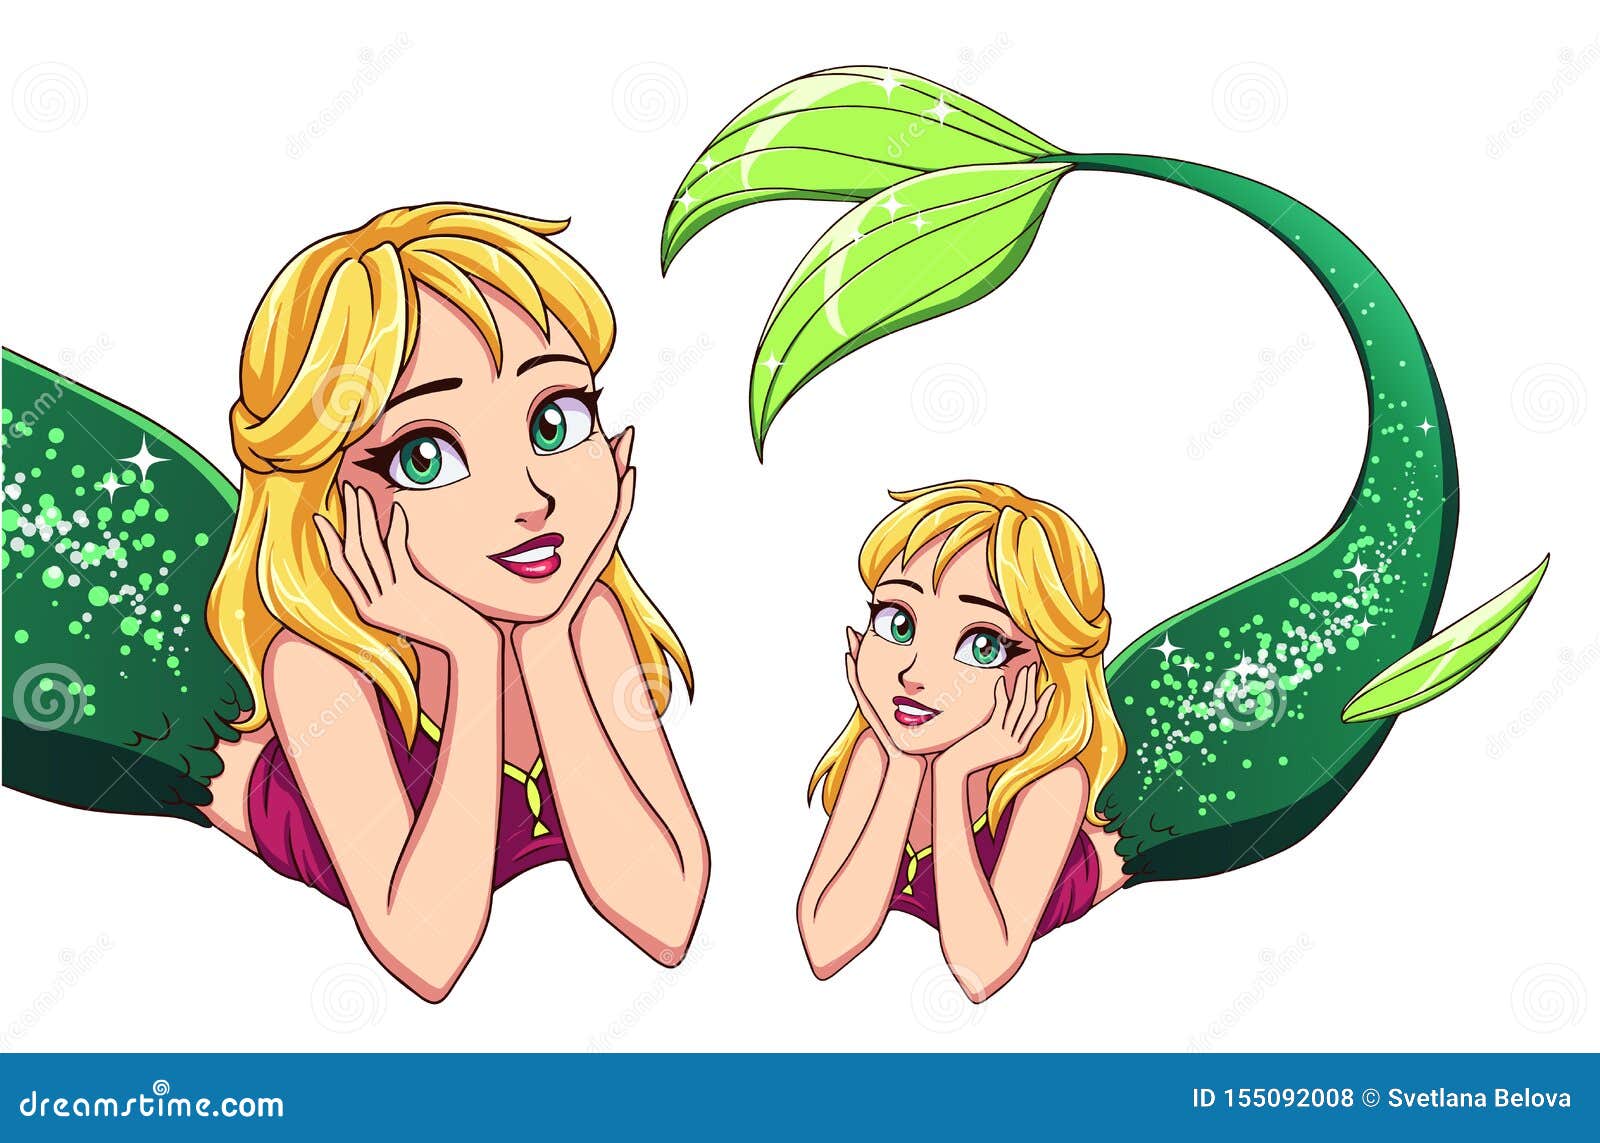 Pretty Cartoon Lying Mermaid. Blonde Hair and Shiny Green Fish